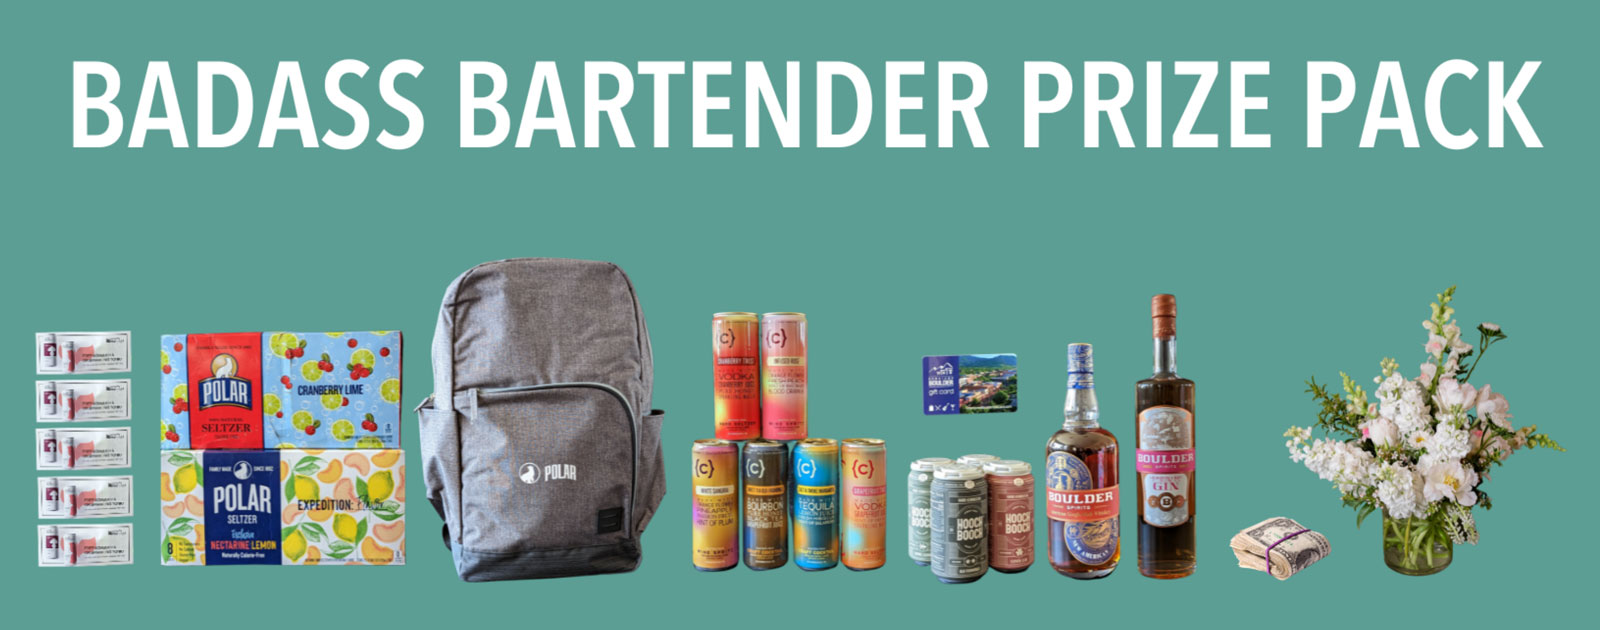 Badass Bartender prize pack